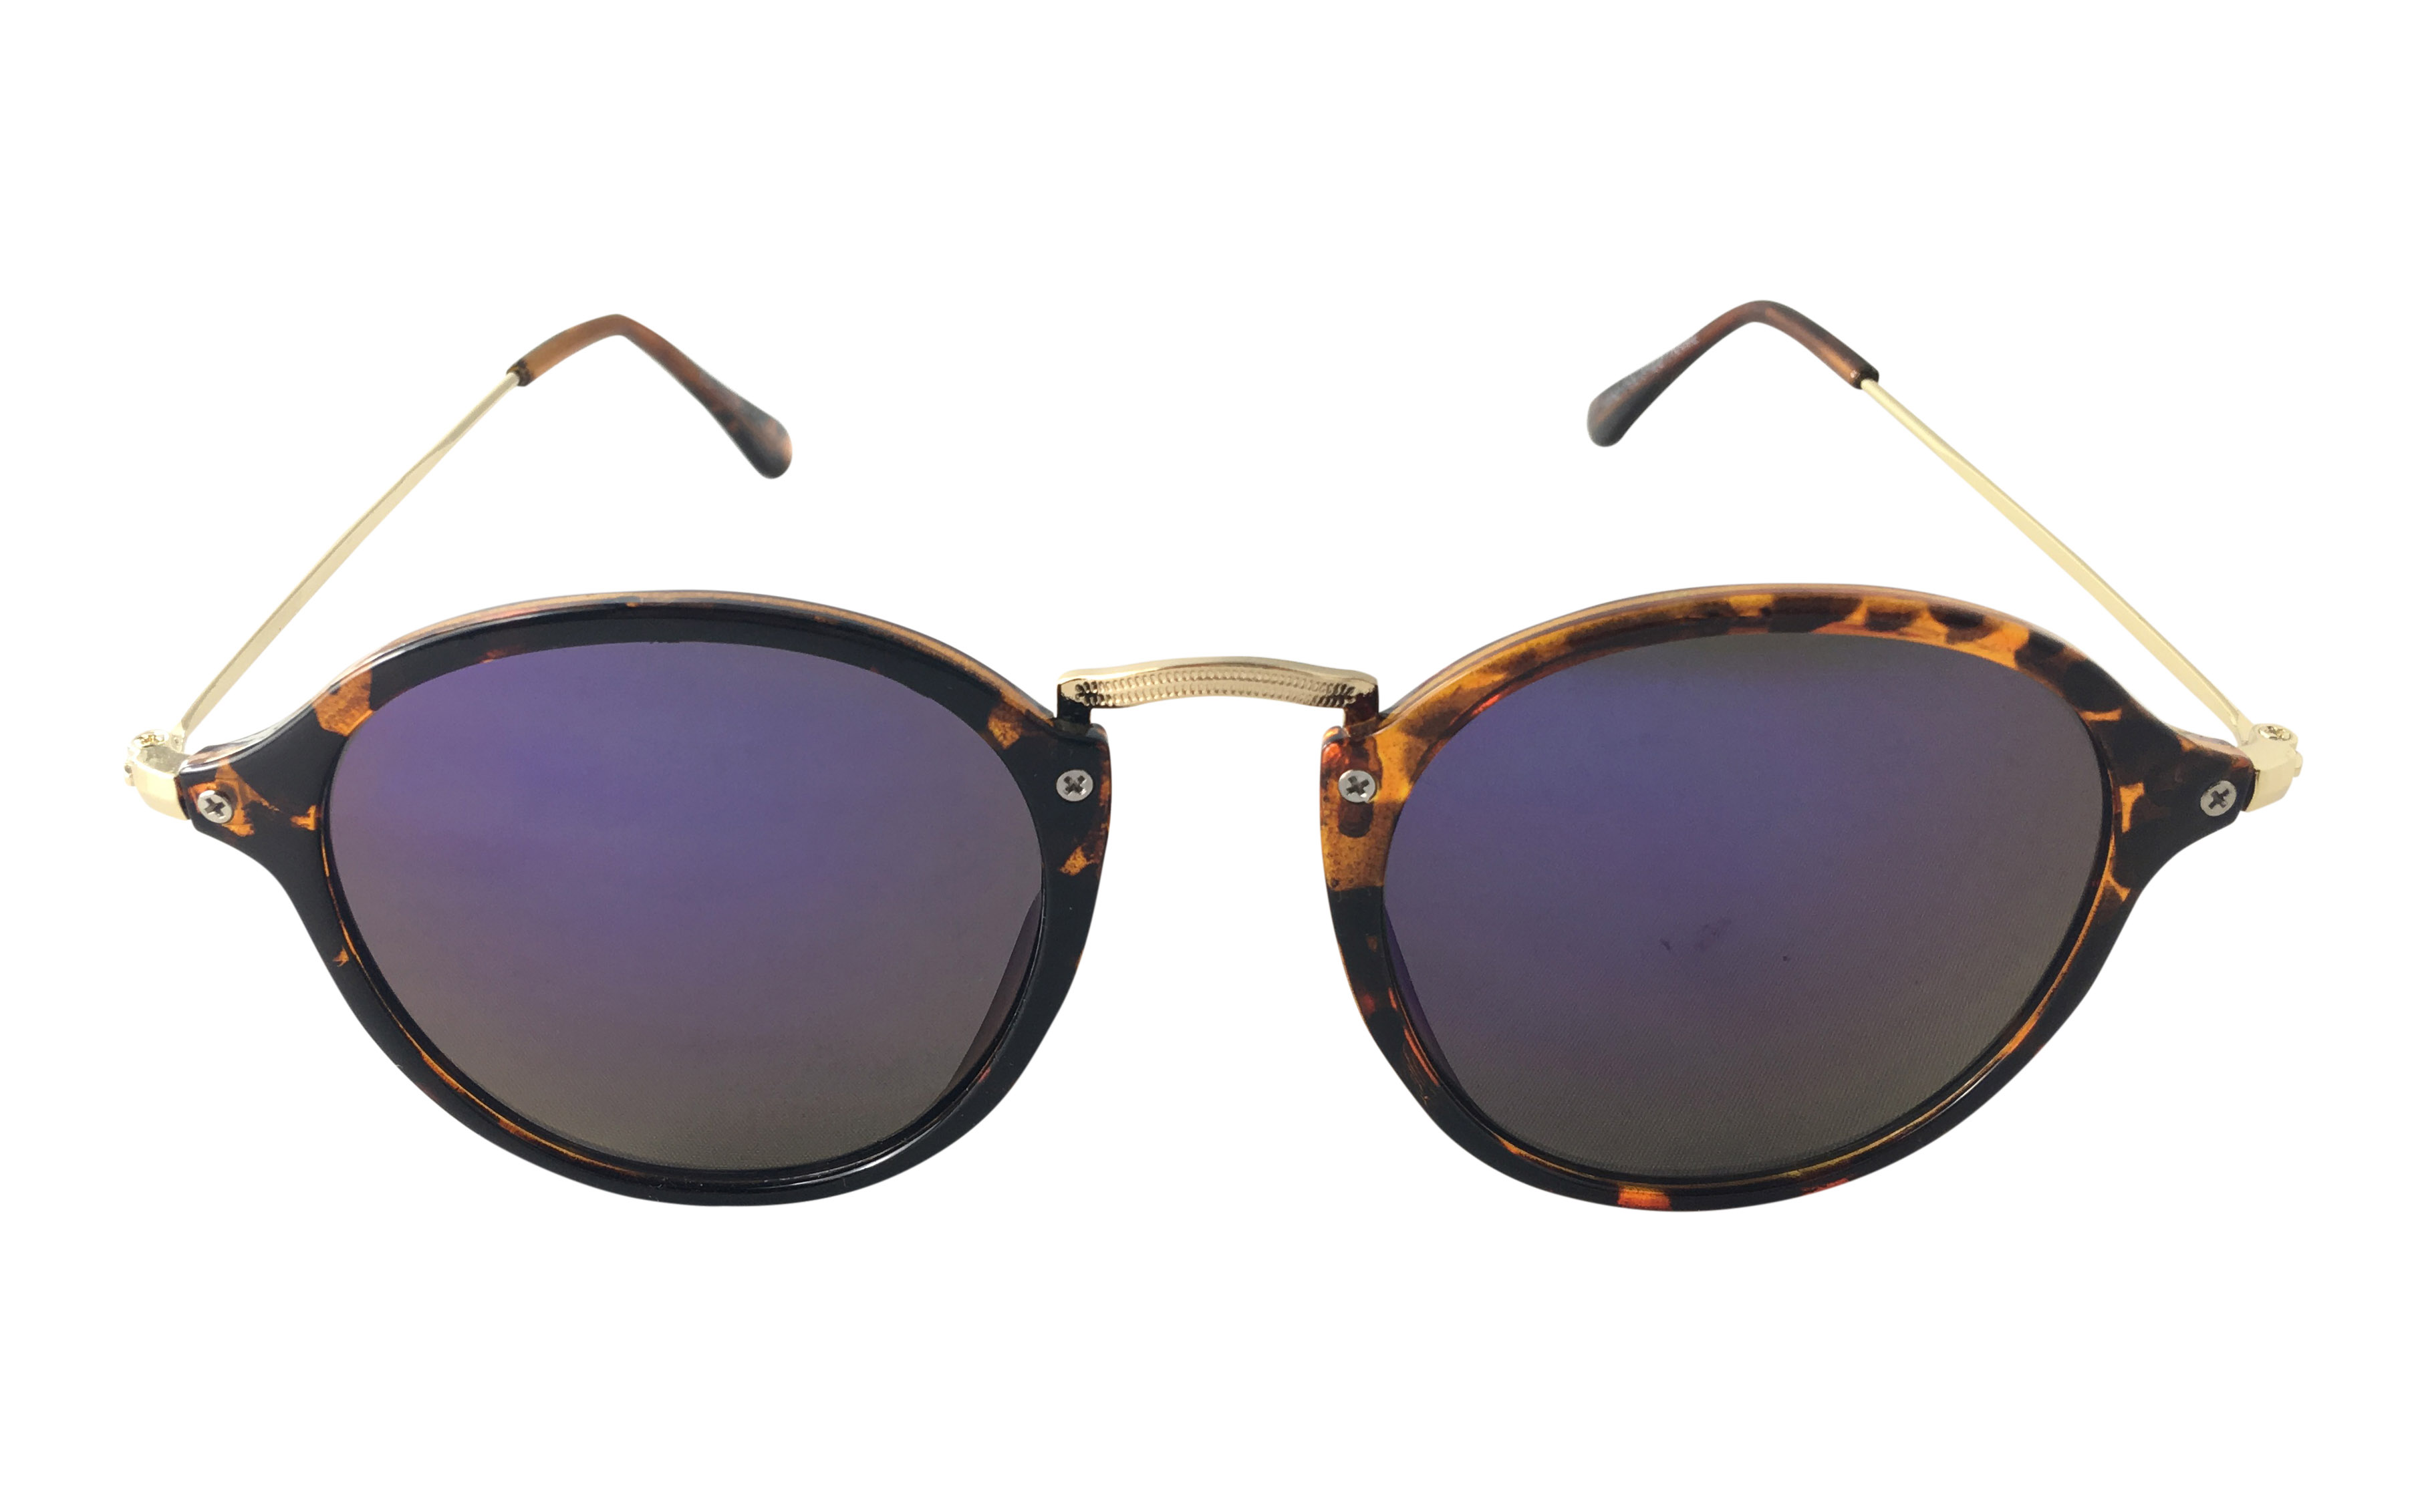 Rund solbrille i skildpaddebrunt stel med lilla spejlglas - Design nr. 3290